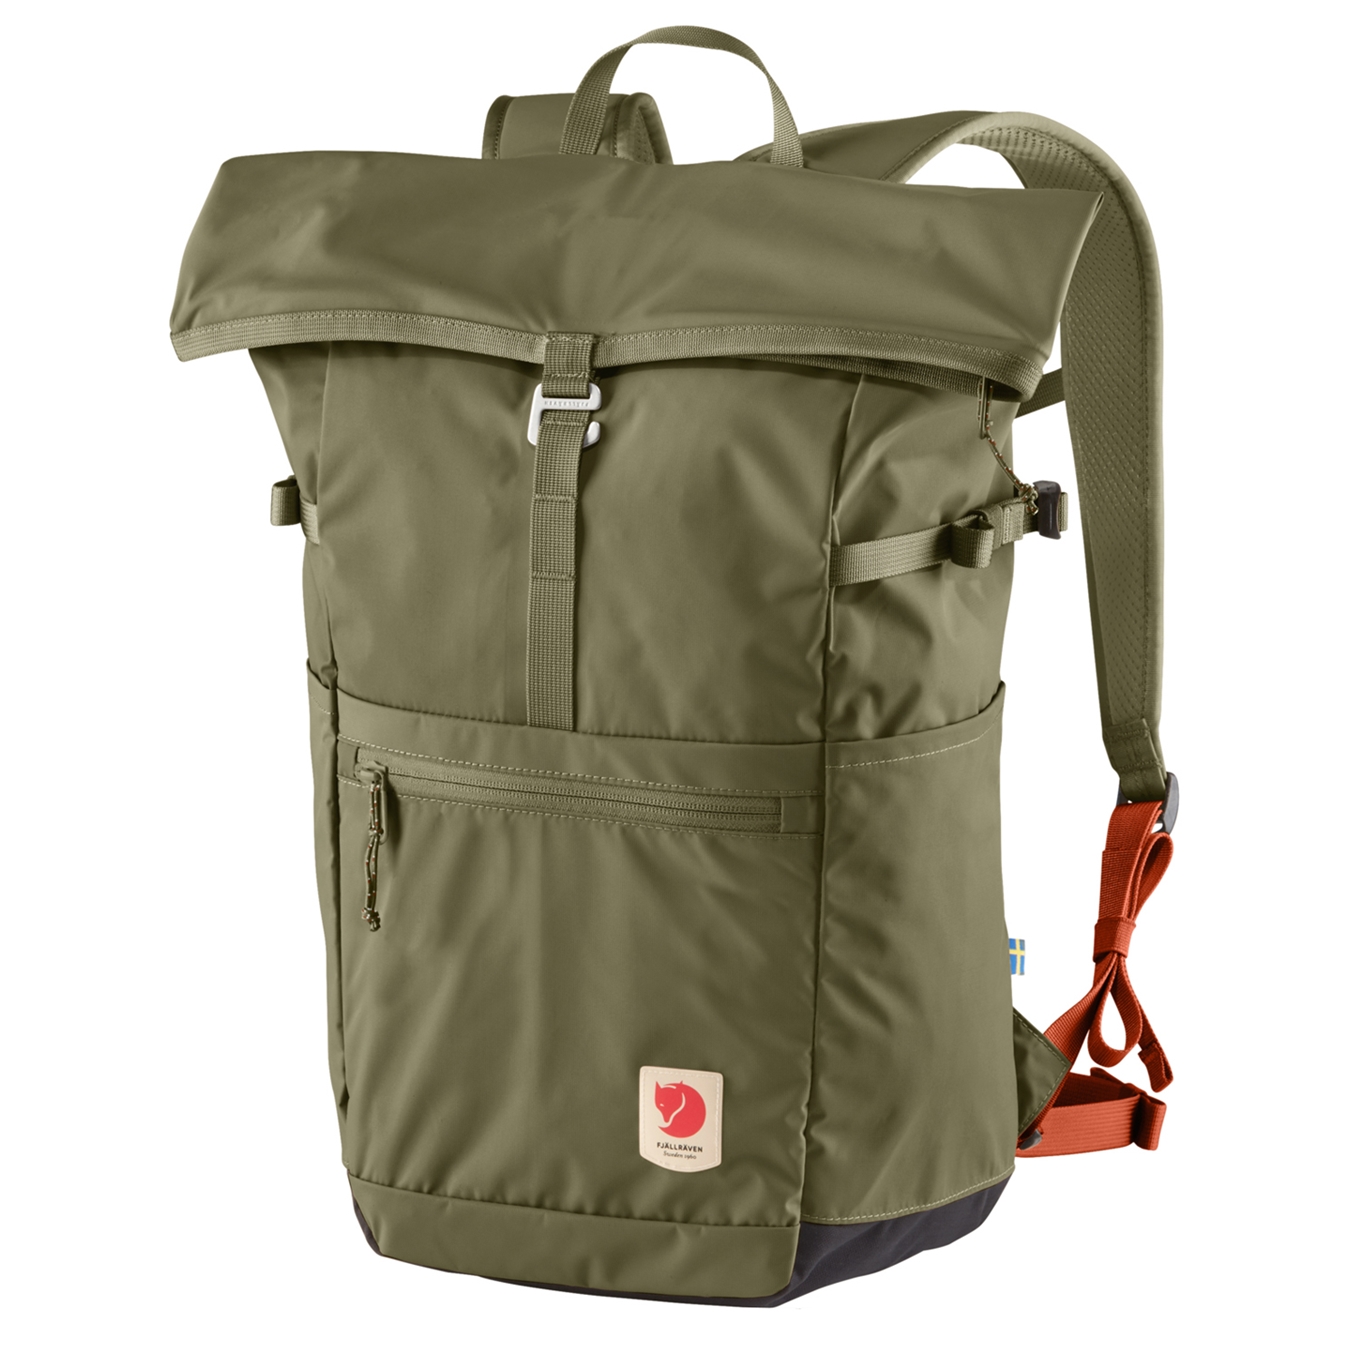 Fjallraven High Coast Foldsack 24 green backpack